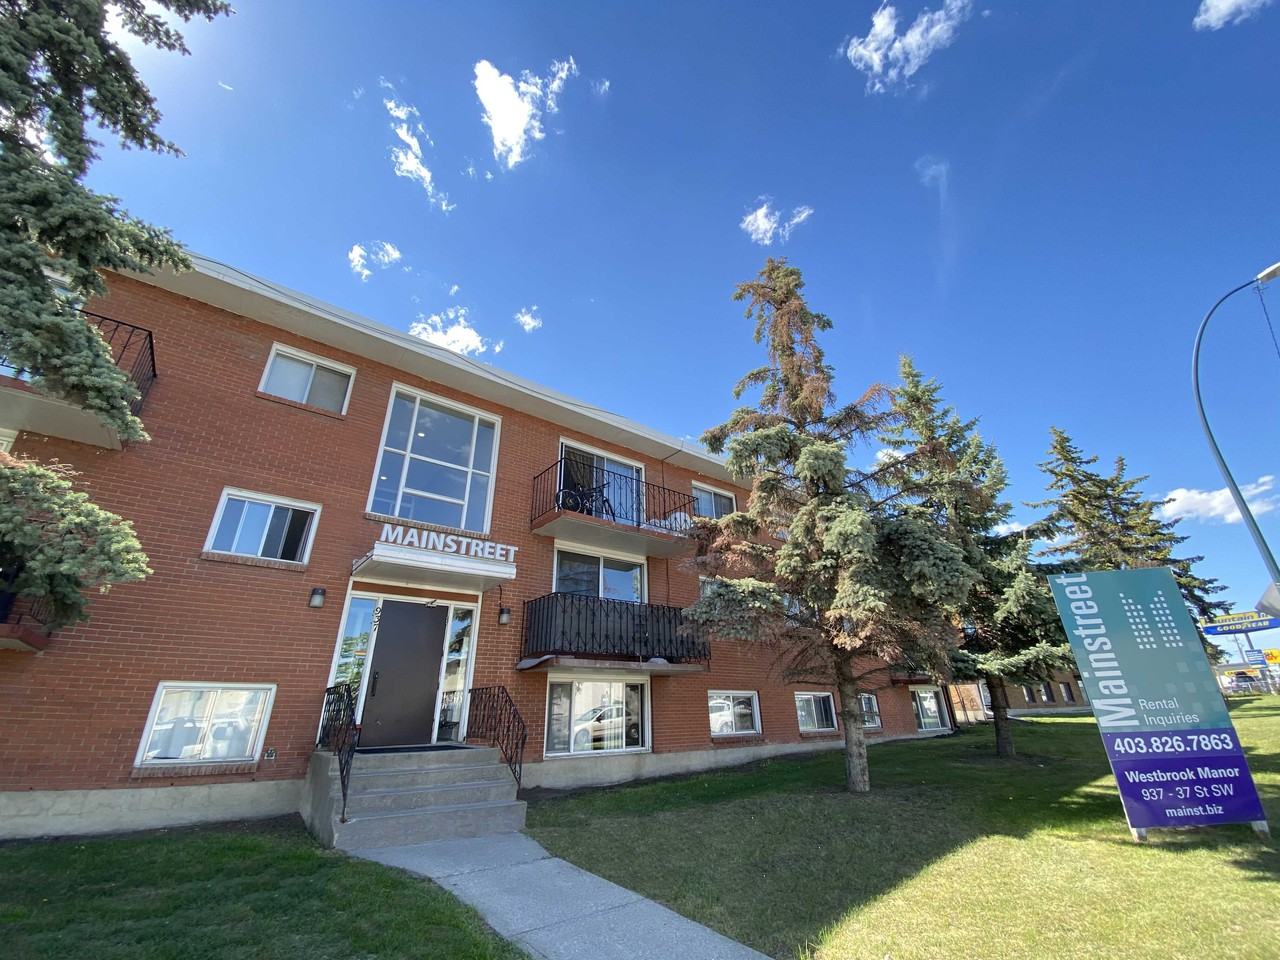 Westbrook Manor Apartments - 937 37 St Sw, Calgary, AB T3C 1S4